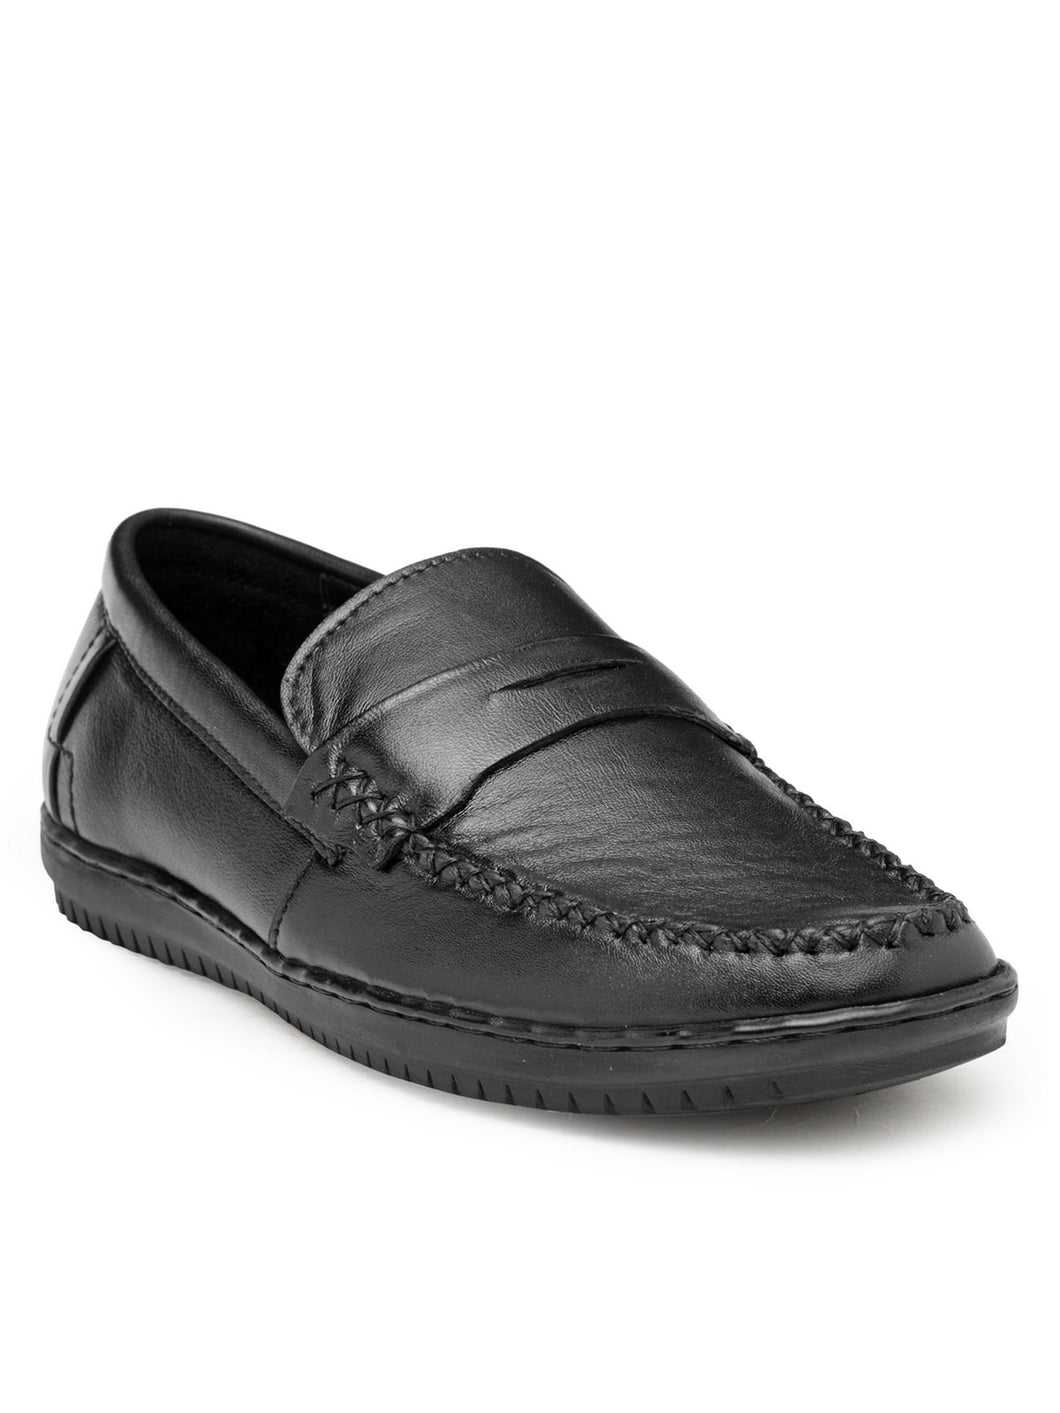 Teakwood Leather Black Casual Shoes